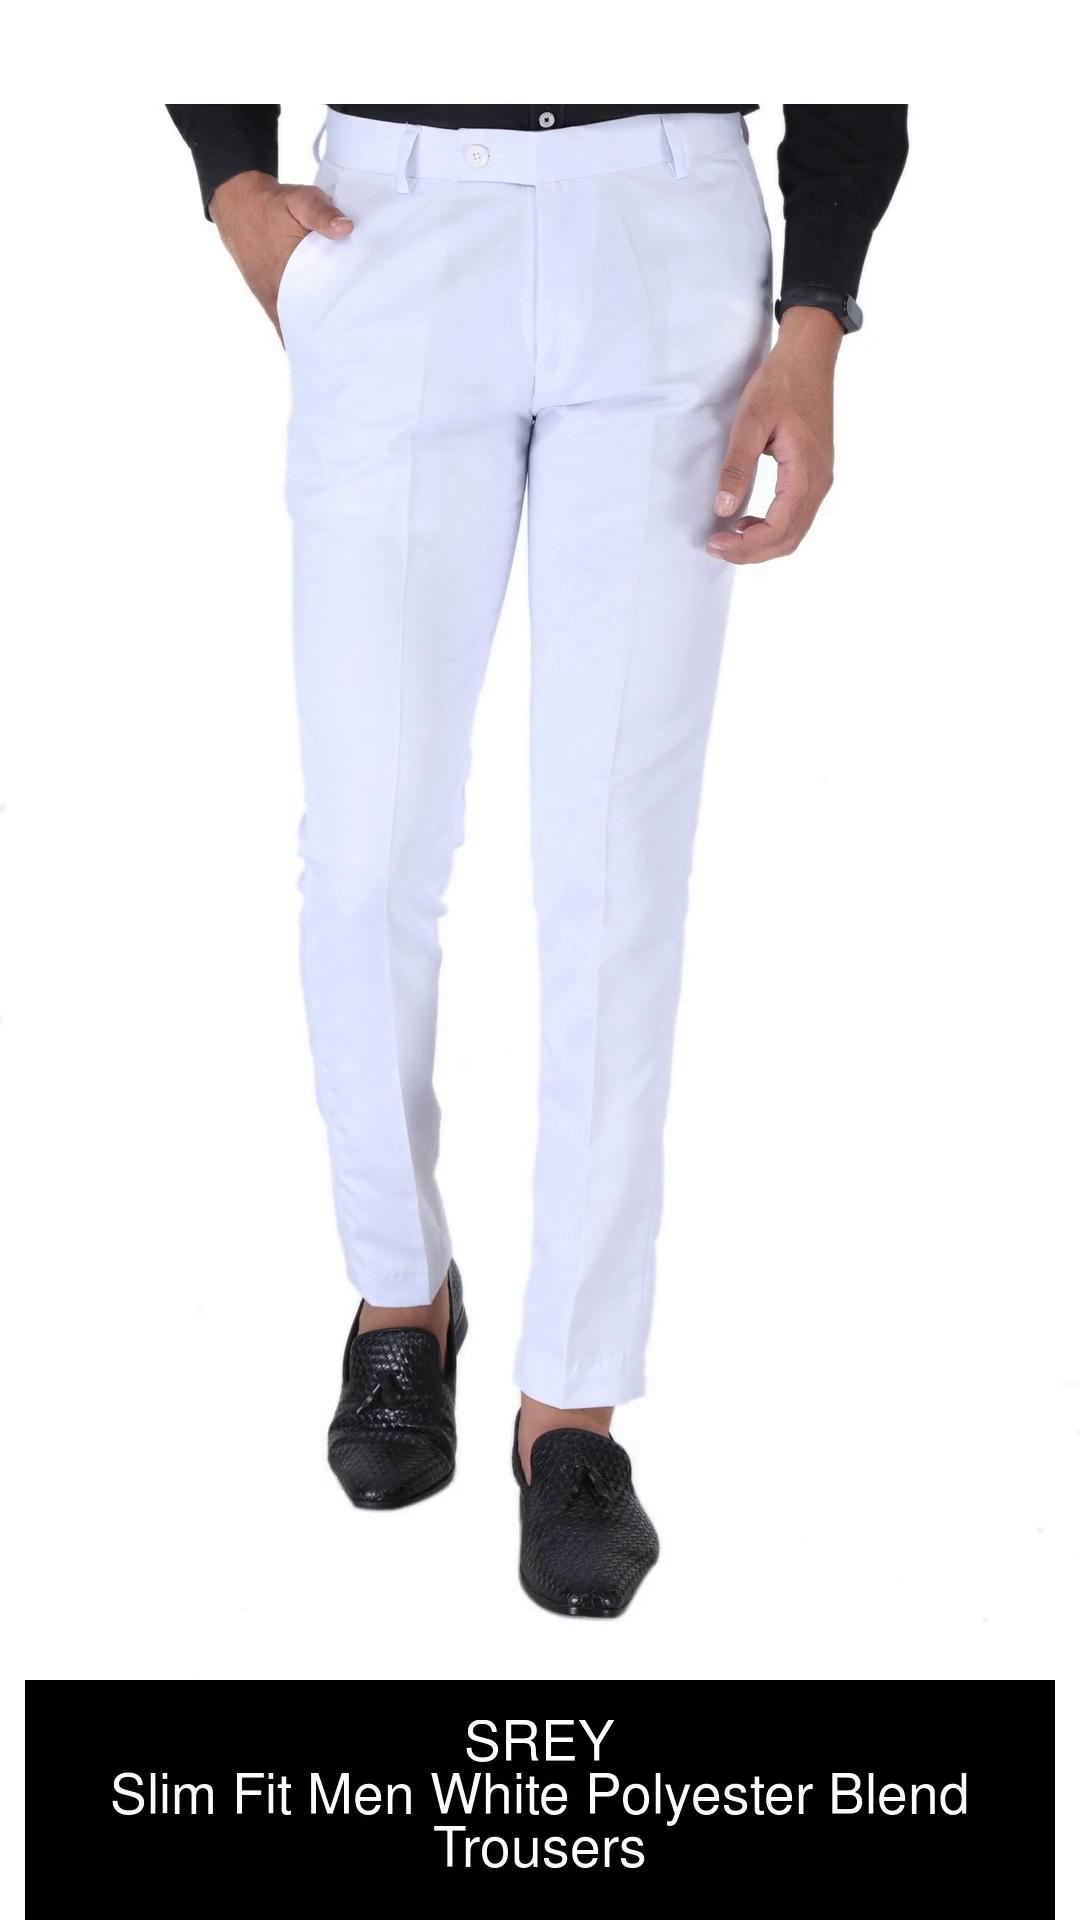 Buy BInfinite Striped Peplum Shirt and White Trousers for Women Online   Tata CLiQ Luxury